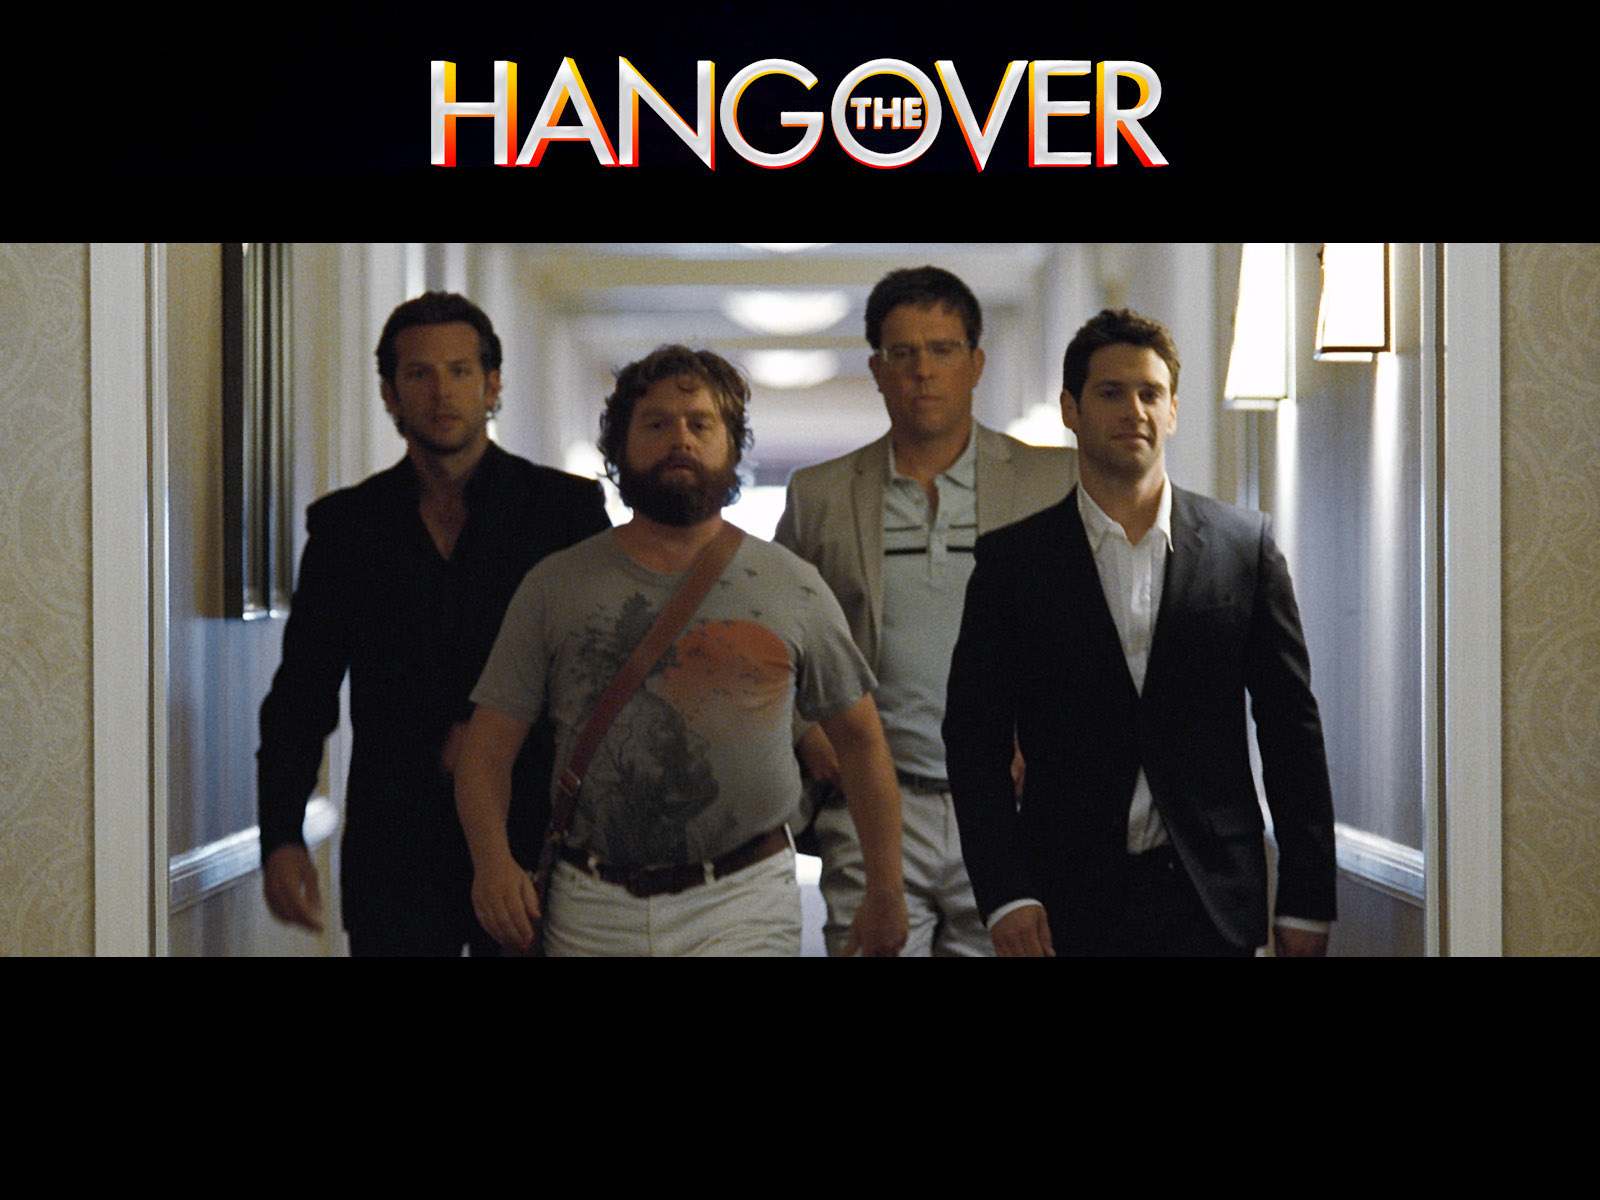 The Hangover #2